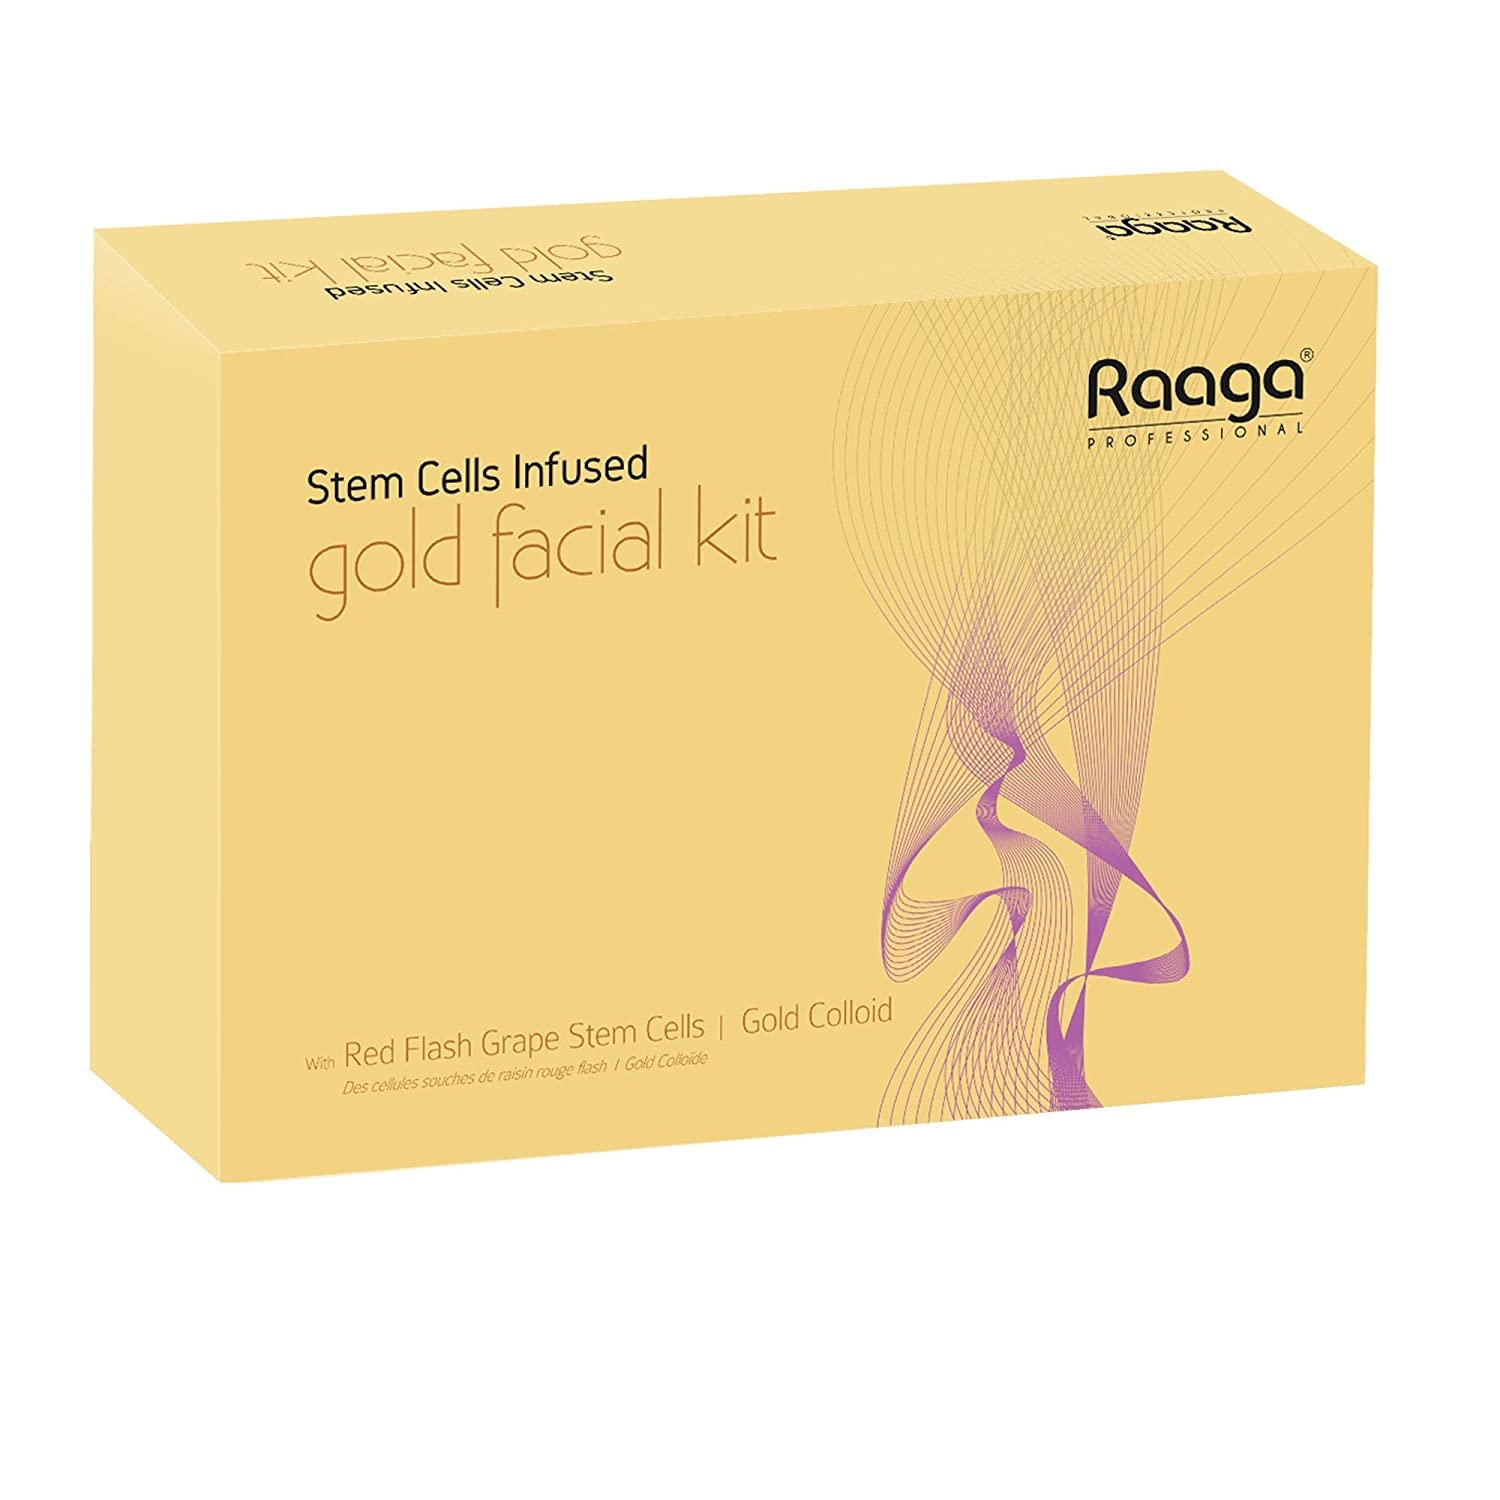 Raaga Professional Stem Cells Infused Gold Facial Kit - 61 gm